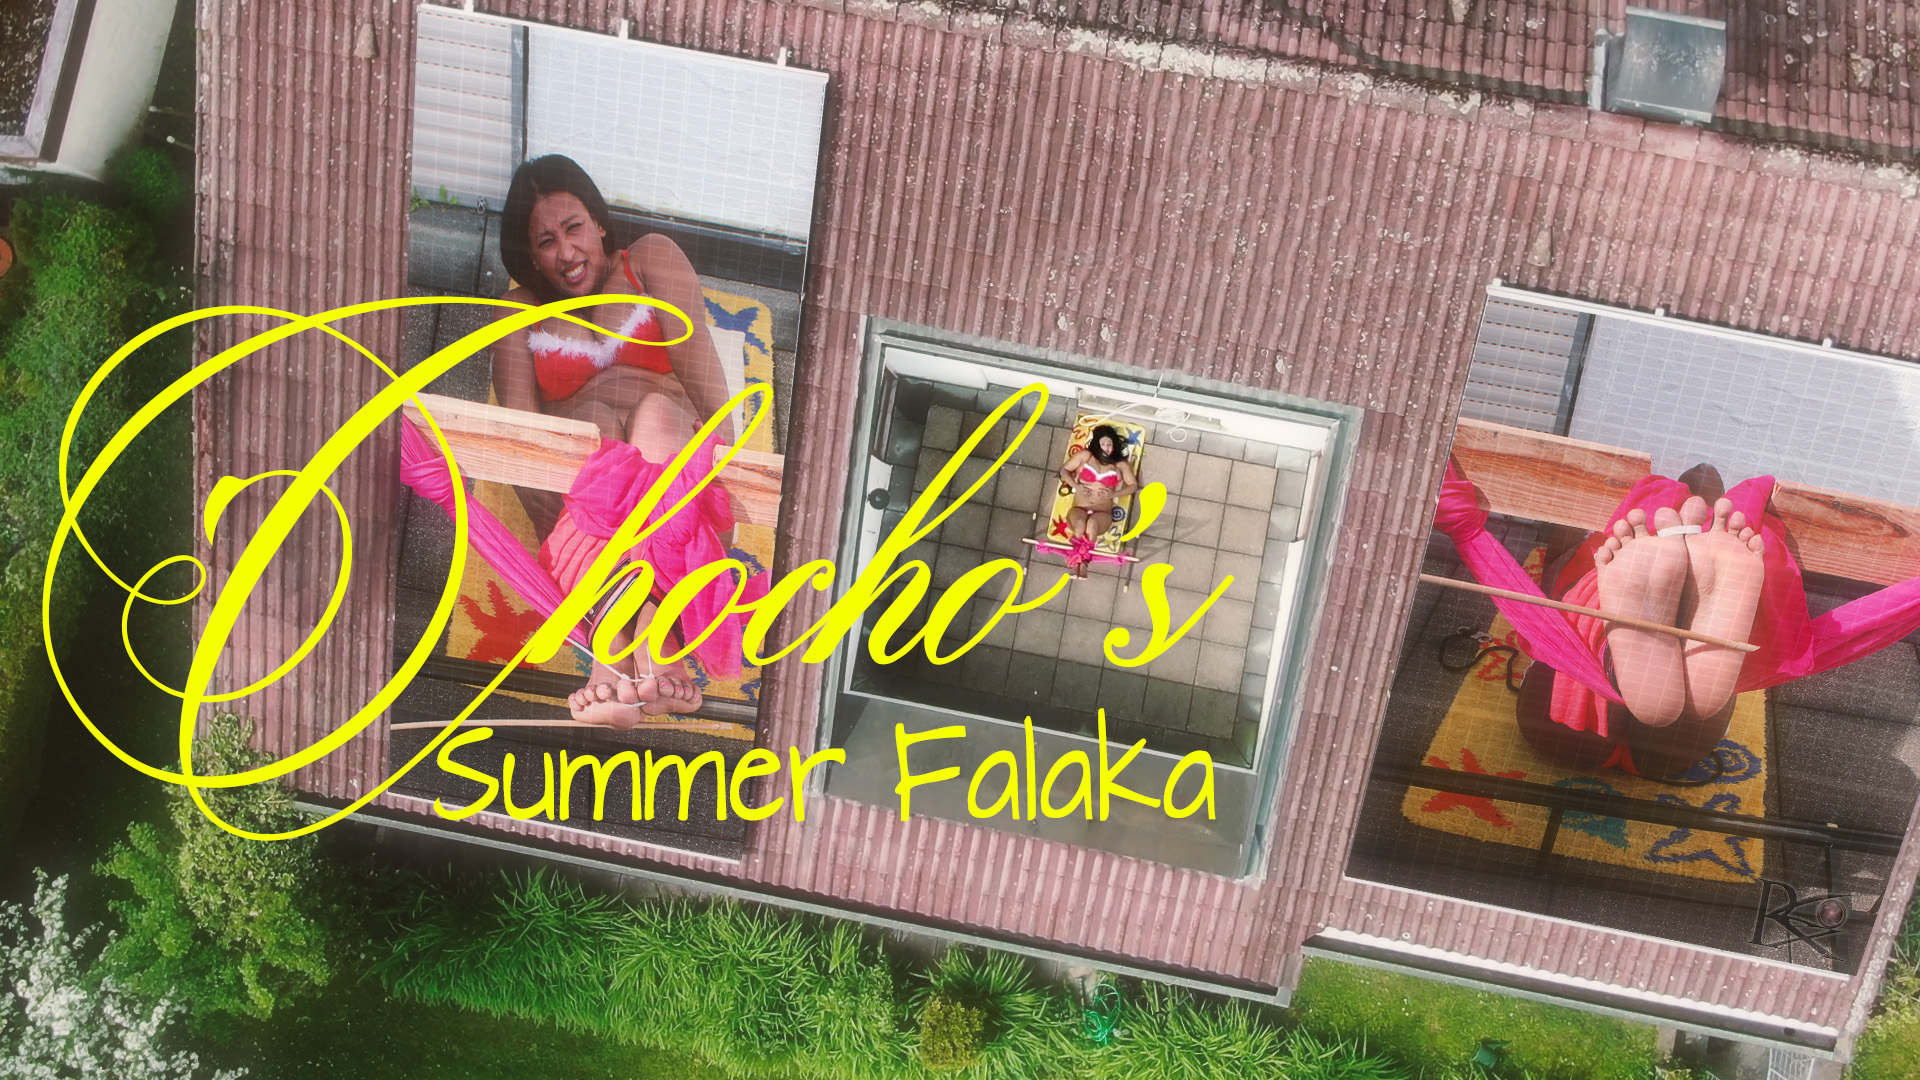 Chocho’s Summer Falaka